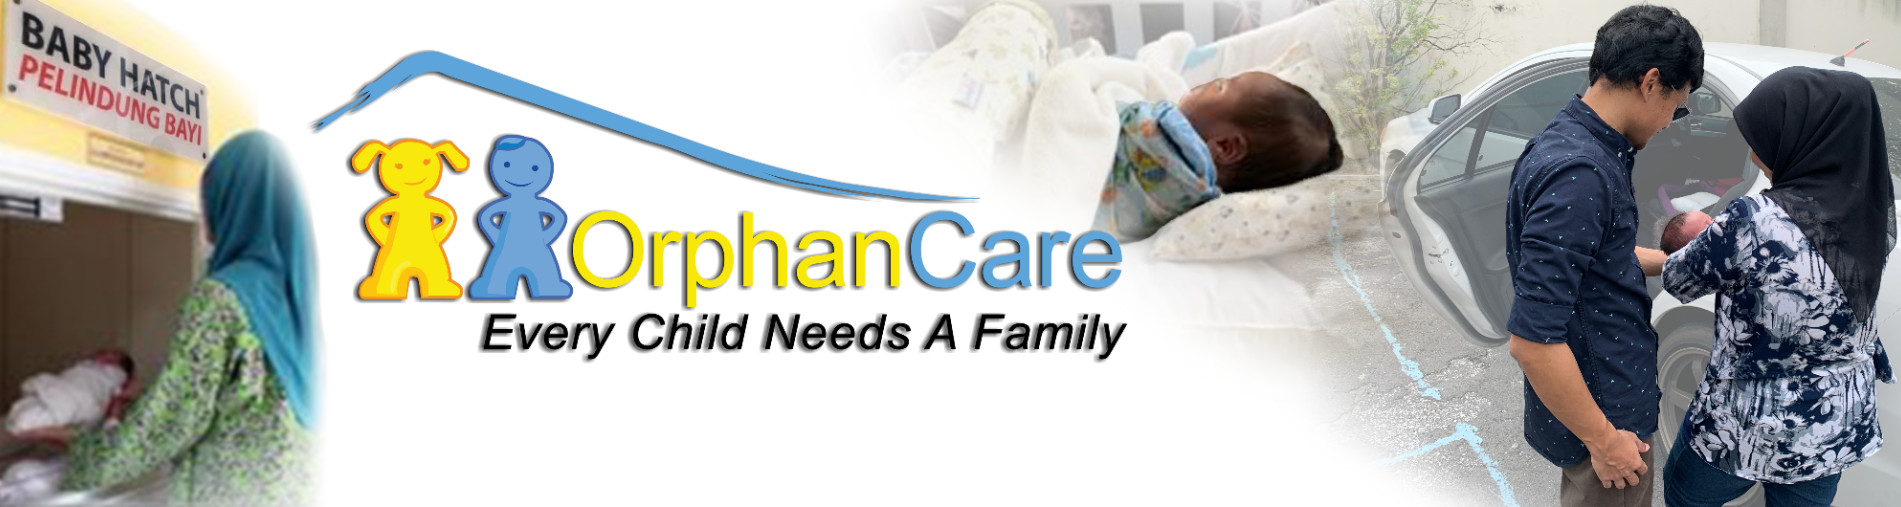 OrphanCare World Children's Campaign